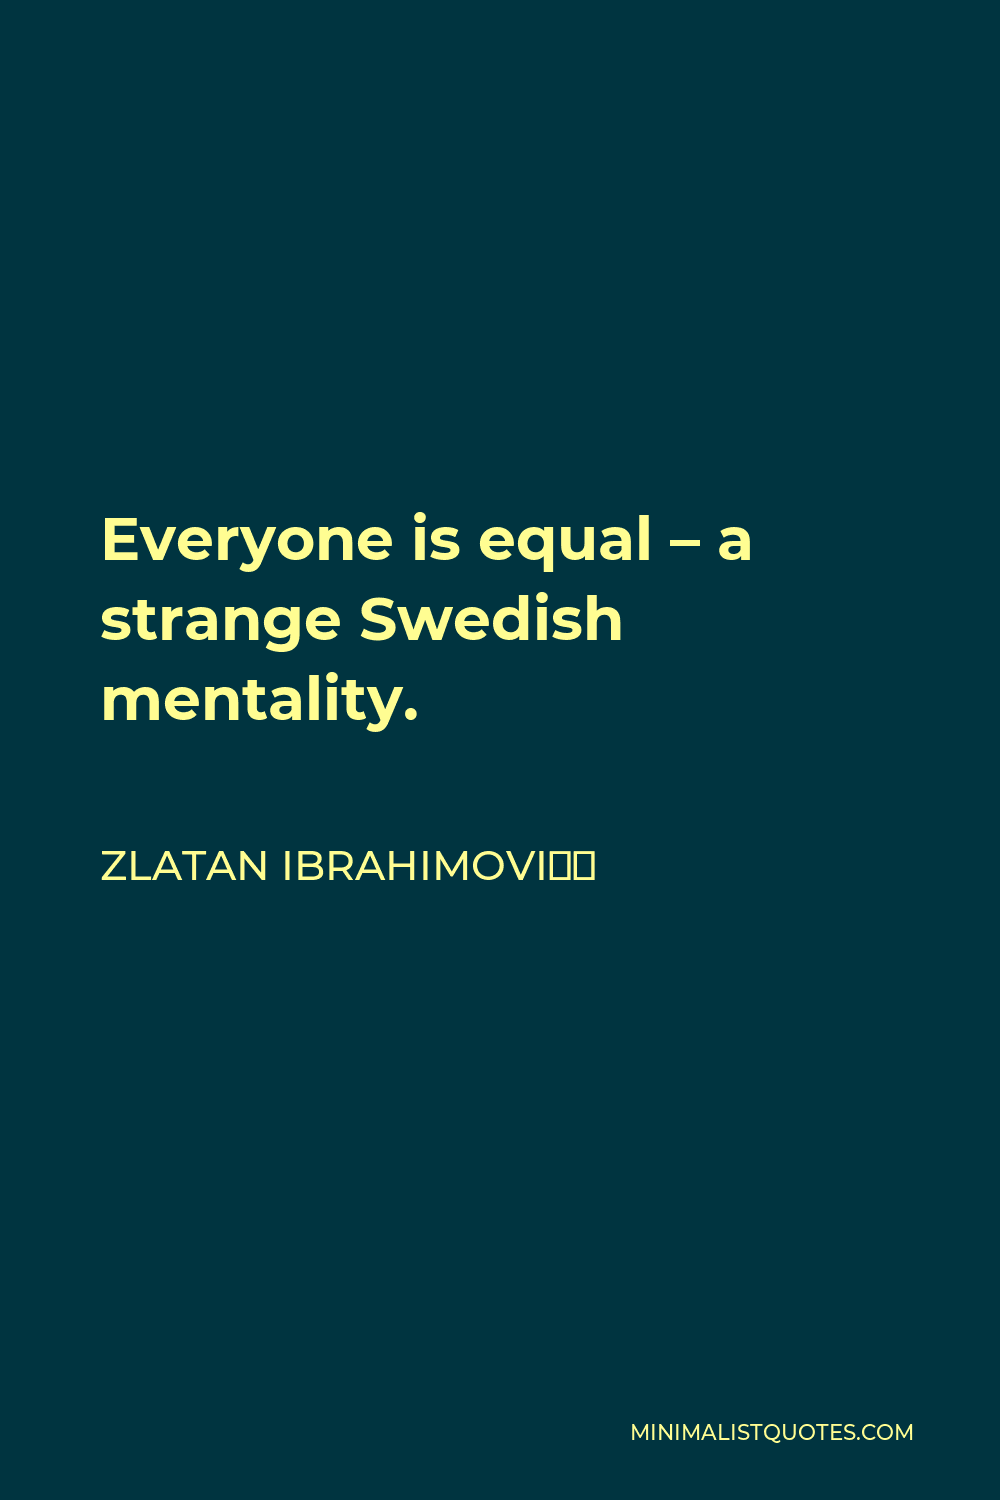 Zlatan Ibrahimović Quote: Everyone is equal - a strange Swedish mentality.